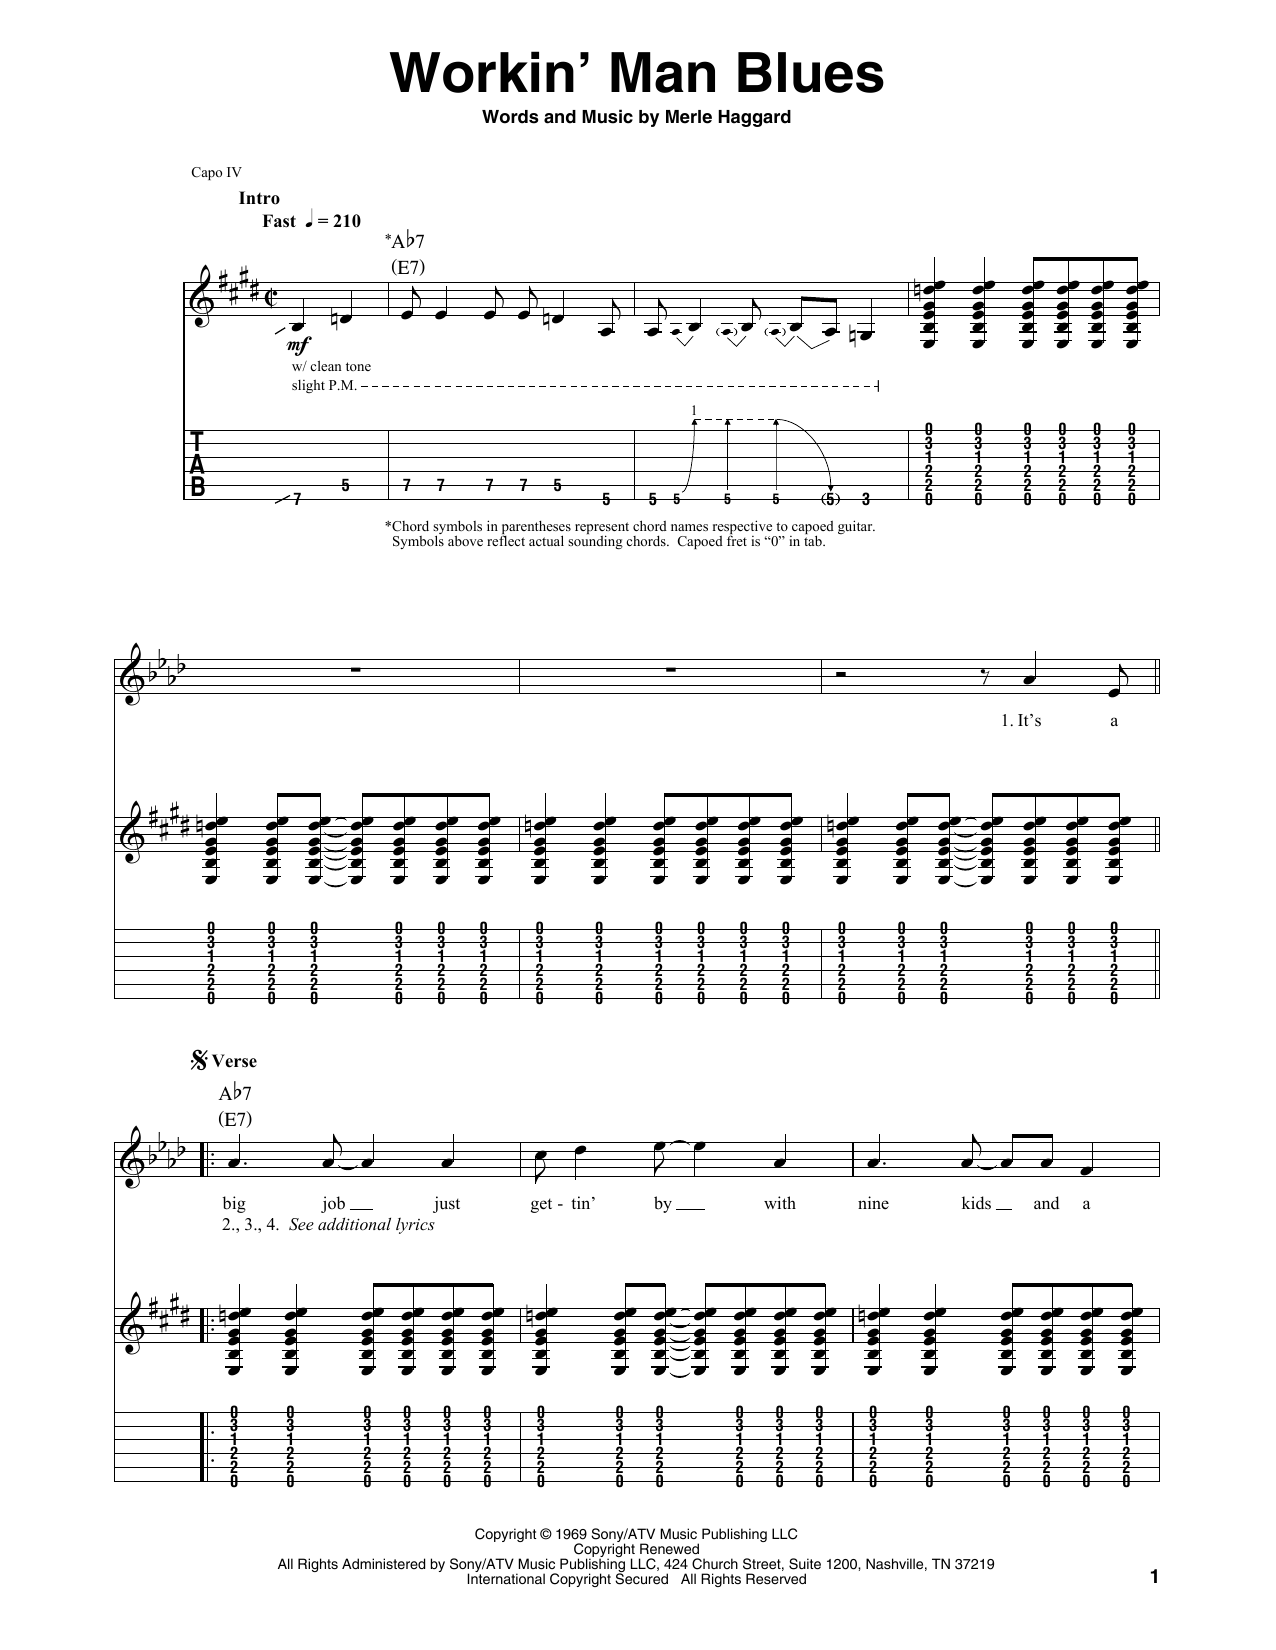 Merle Haggard Workin' Man Blues Sheet Music Notes & Chords for Real Book – Melody, Lyrics & Chords - Download or Print PDF